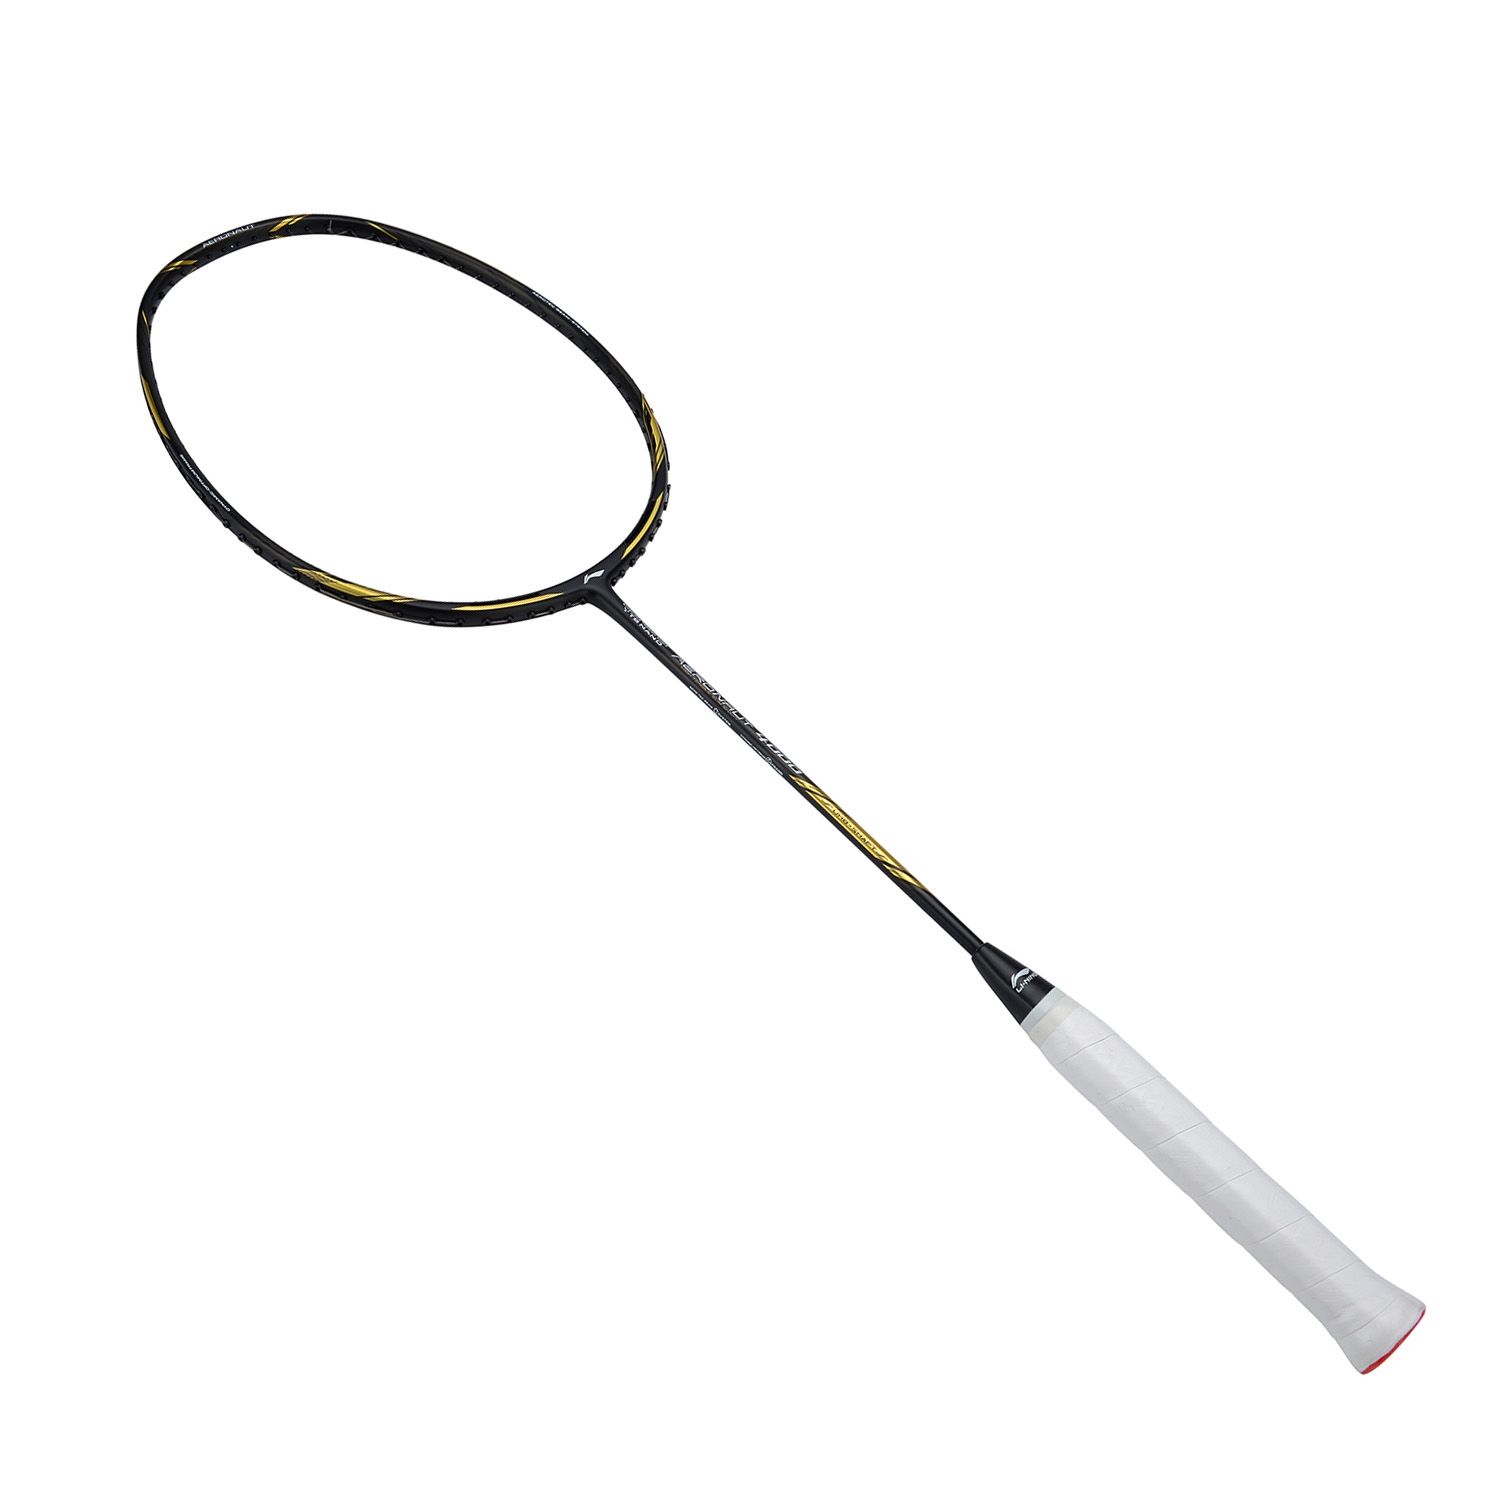 Li-Ning Badminton Aeronaut 4000 Racket | Black Gold | 2019 All England Open Badminton Racquet